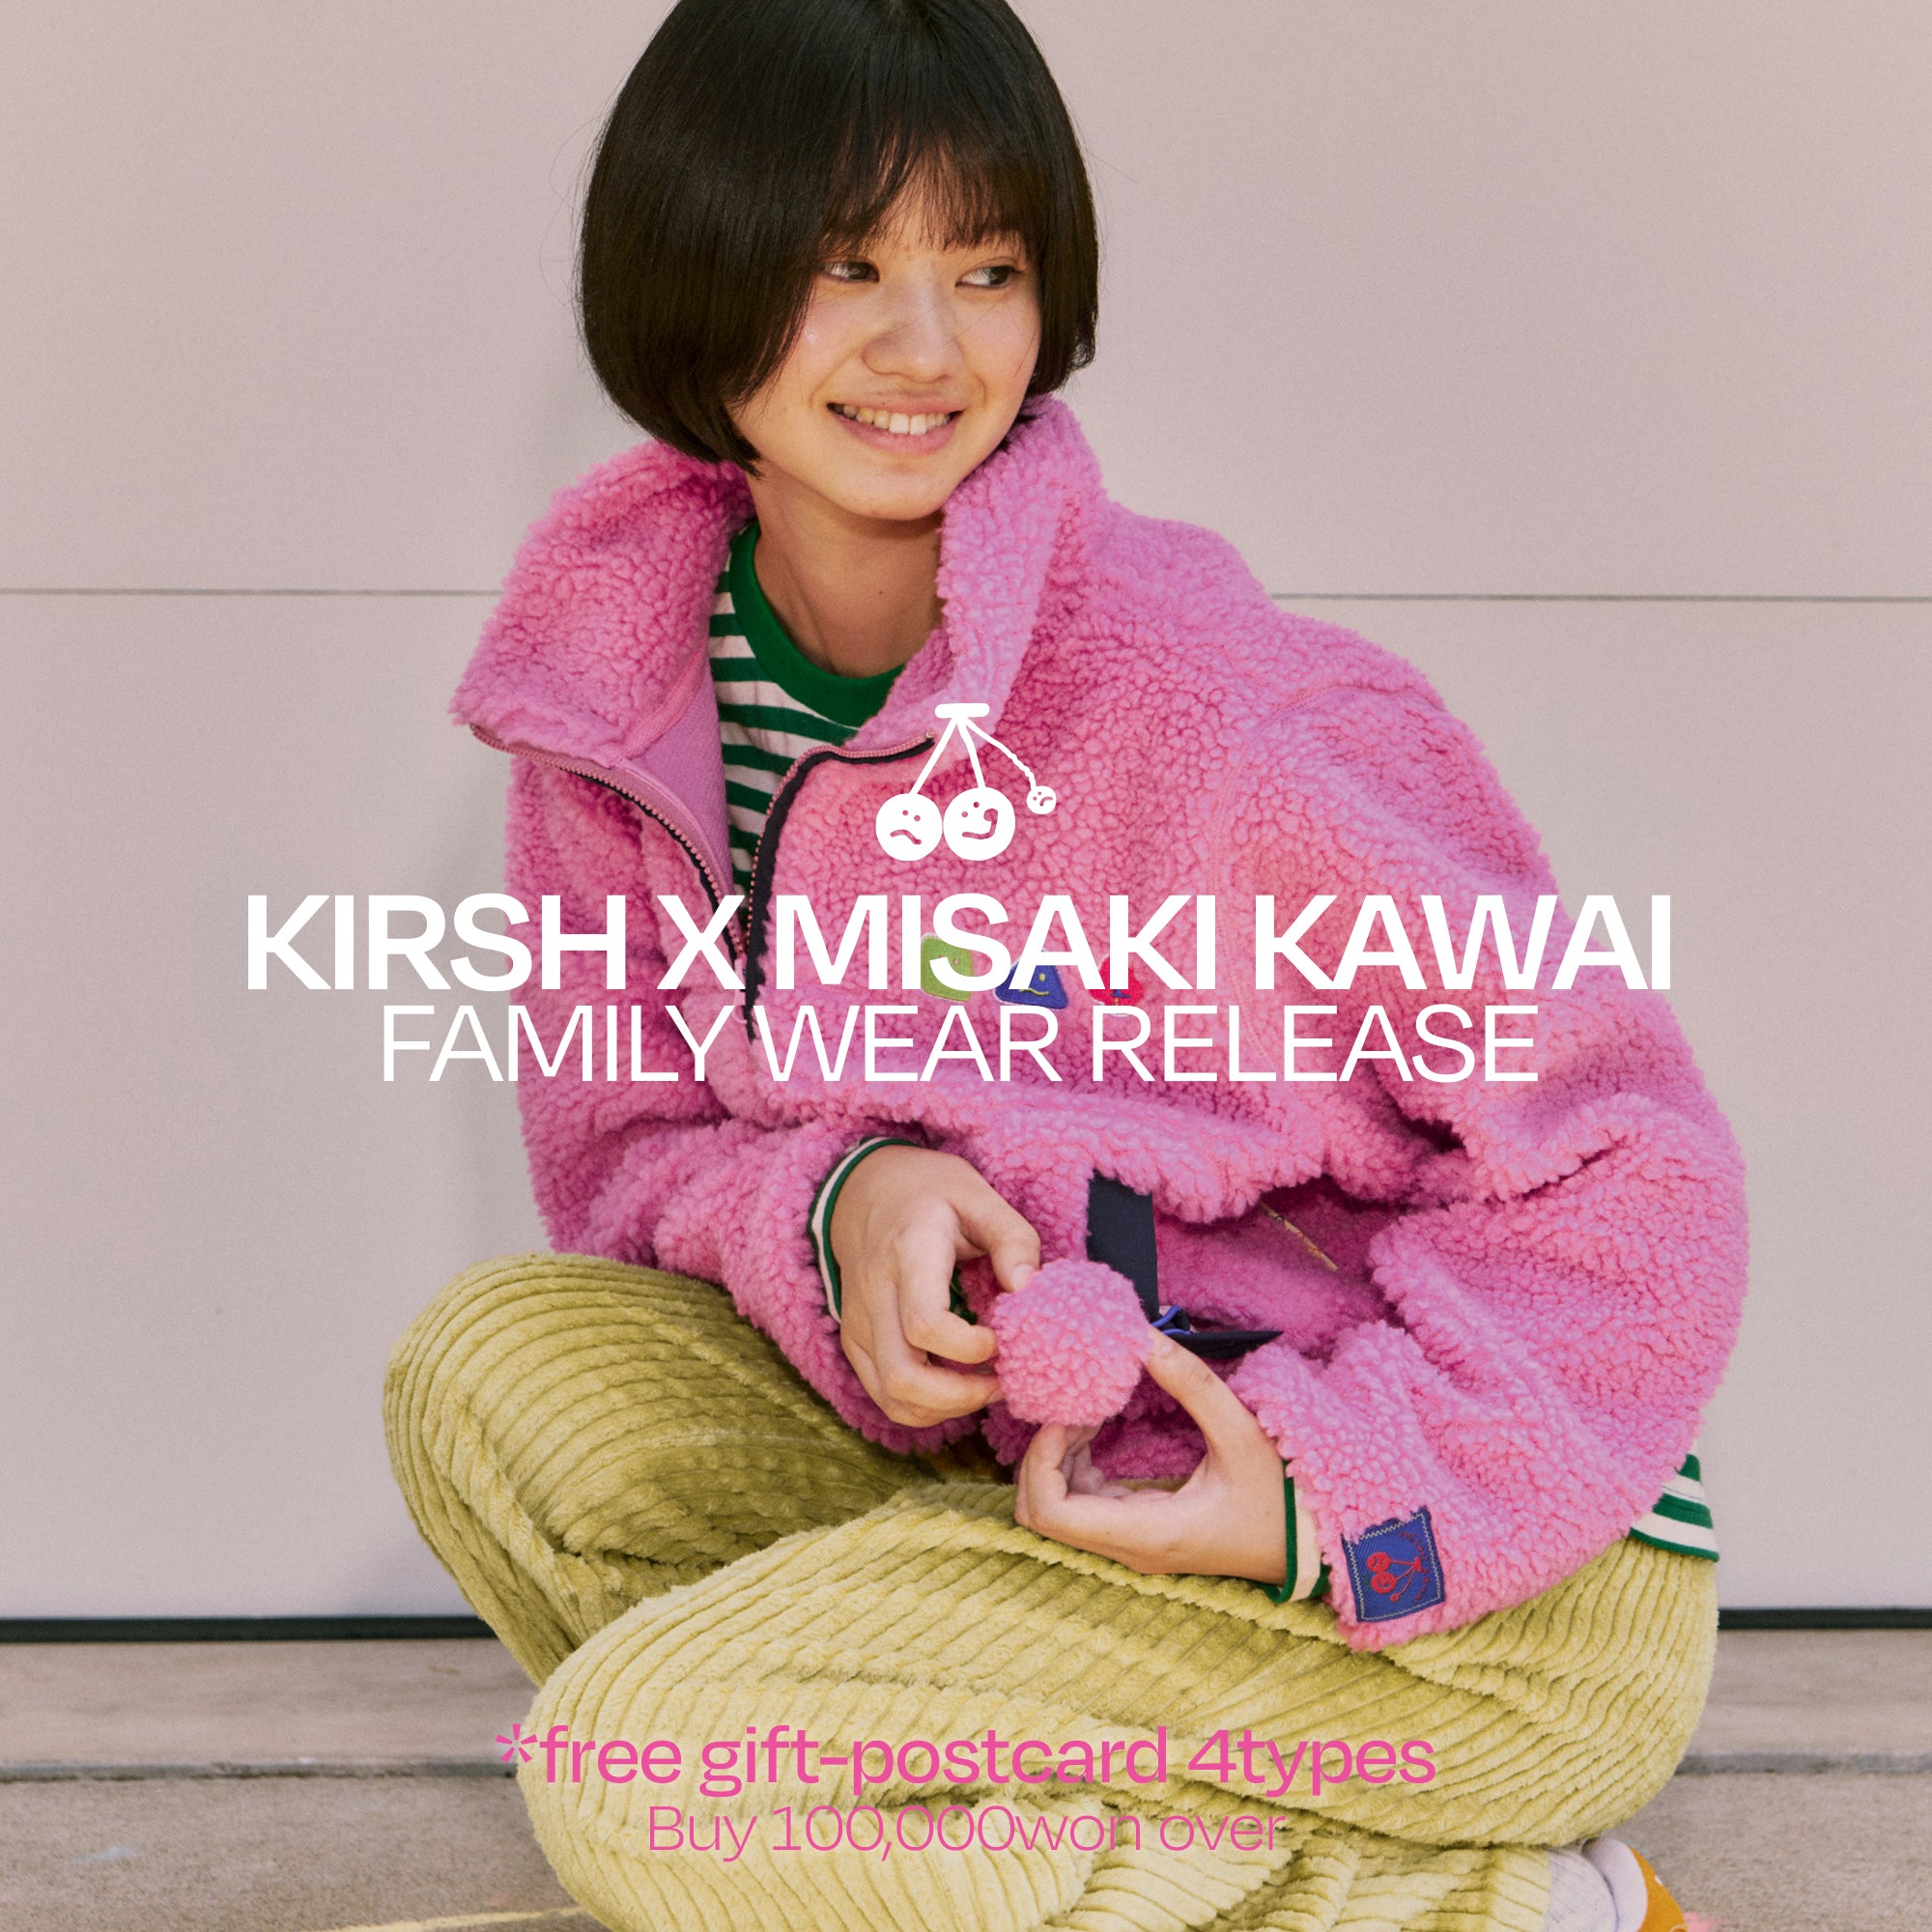 KIRSH X MISAKI KAWAI ノベルティキャンペーン